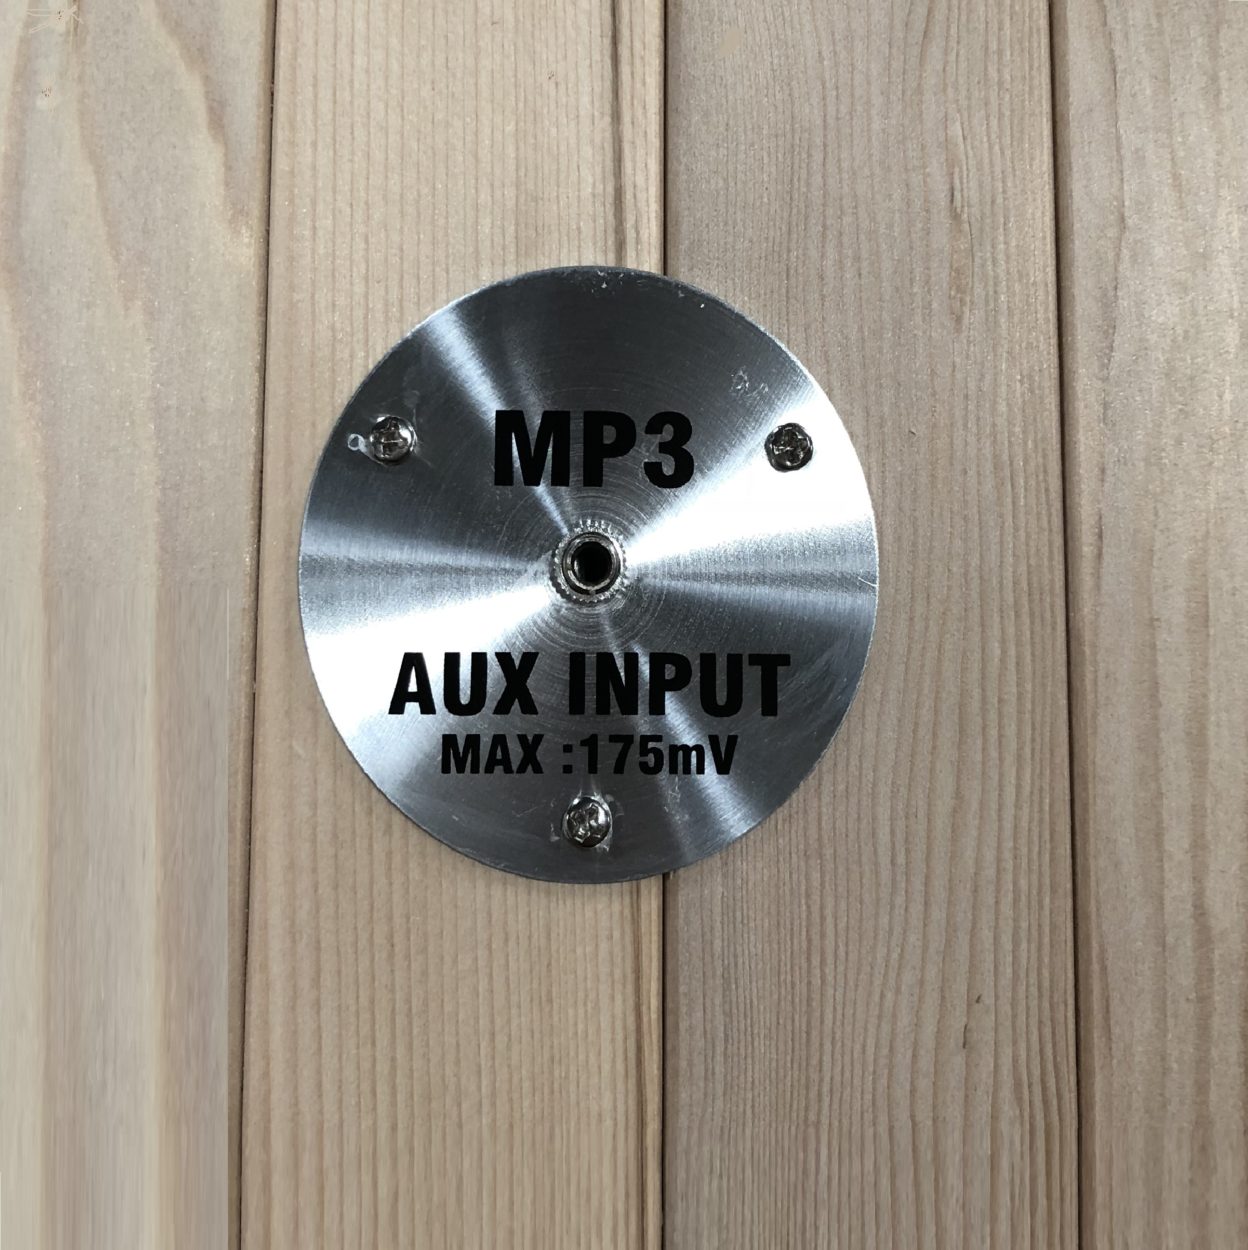 Maxxus "Alpine" Dual Techology 3 person Low EMF FAR Infrared Sauna Canadian Hemlock